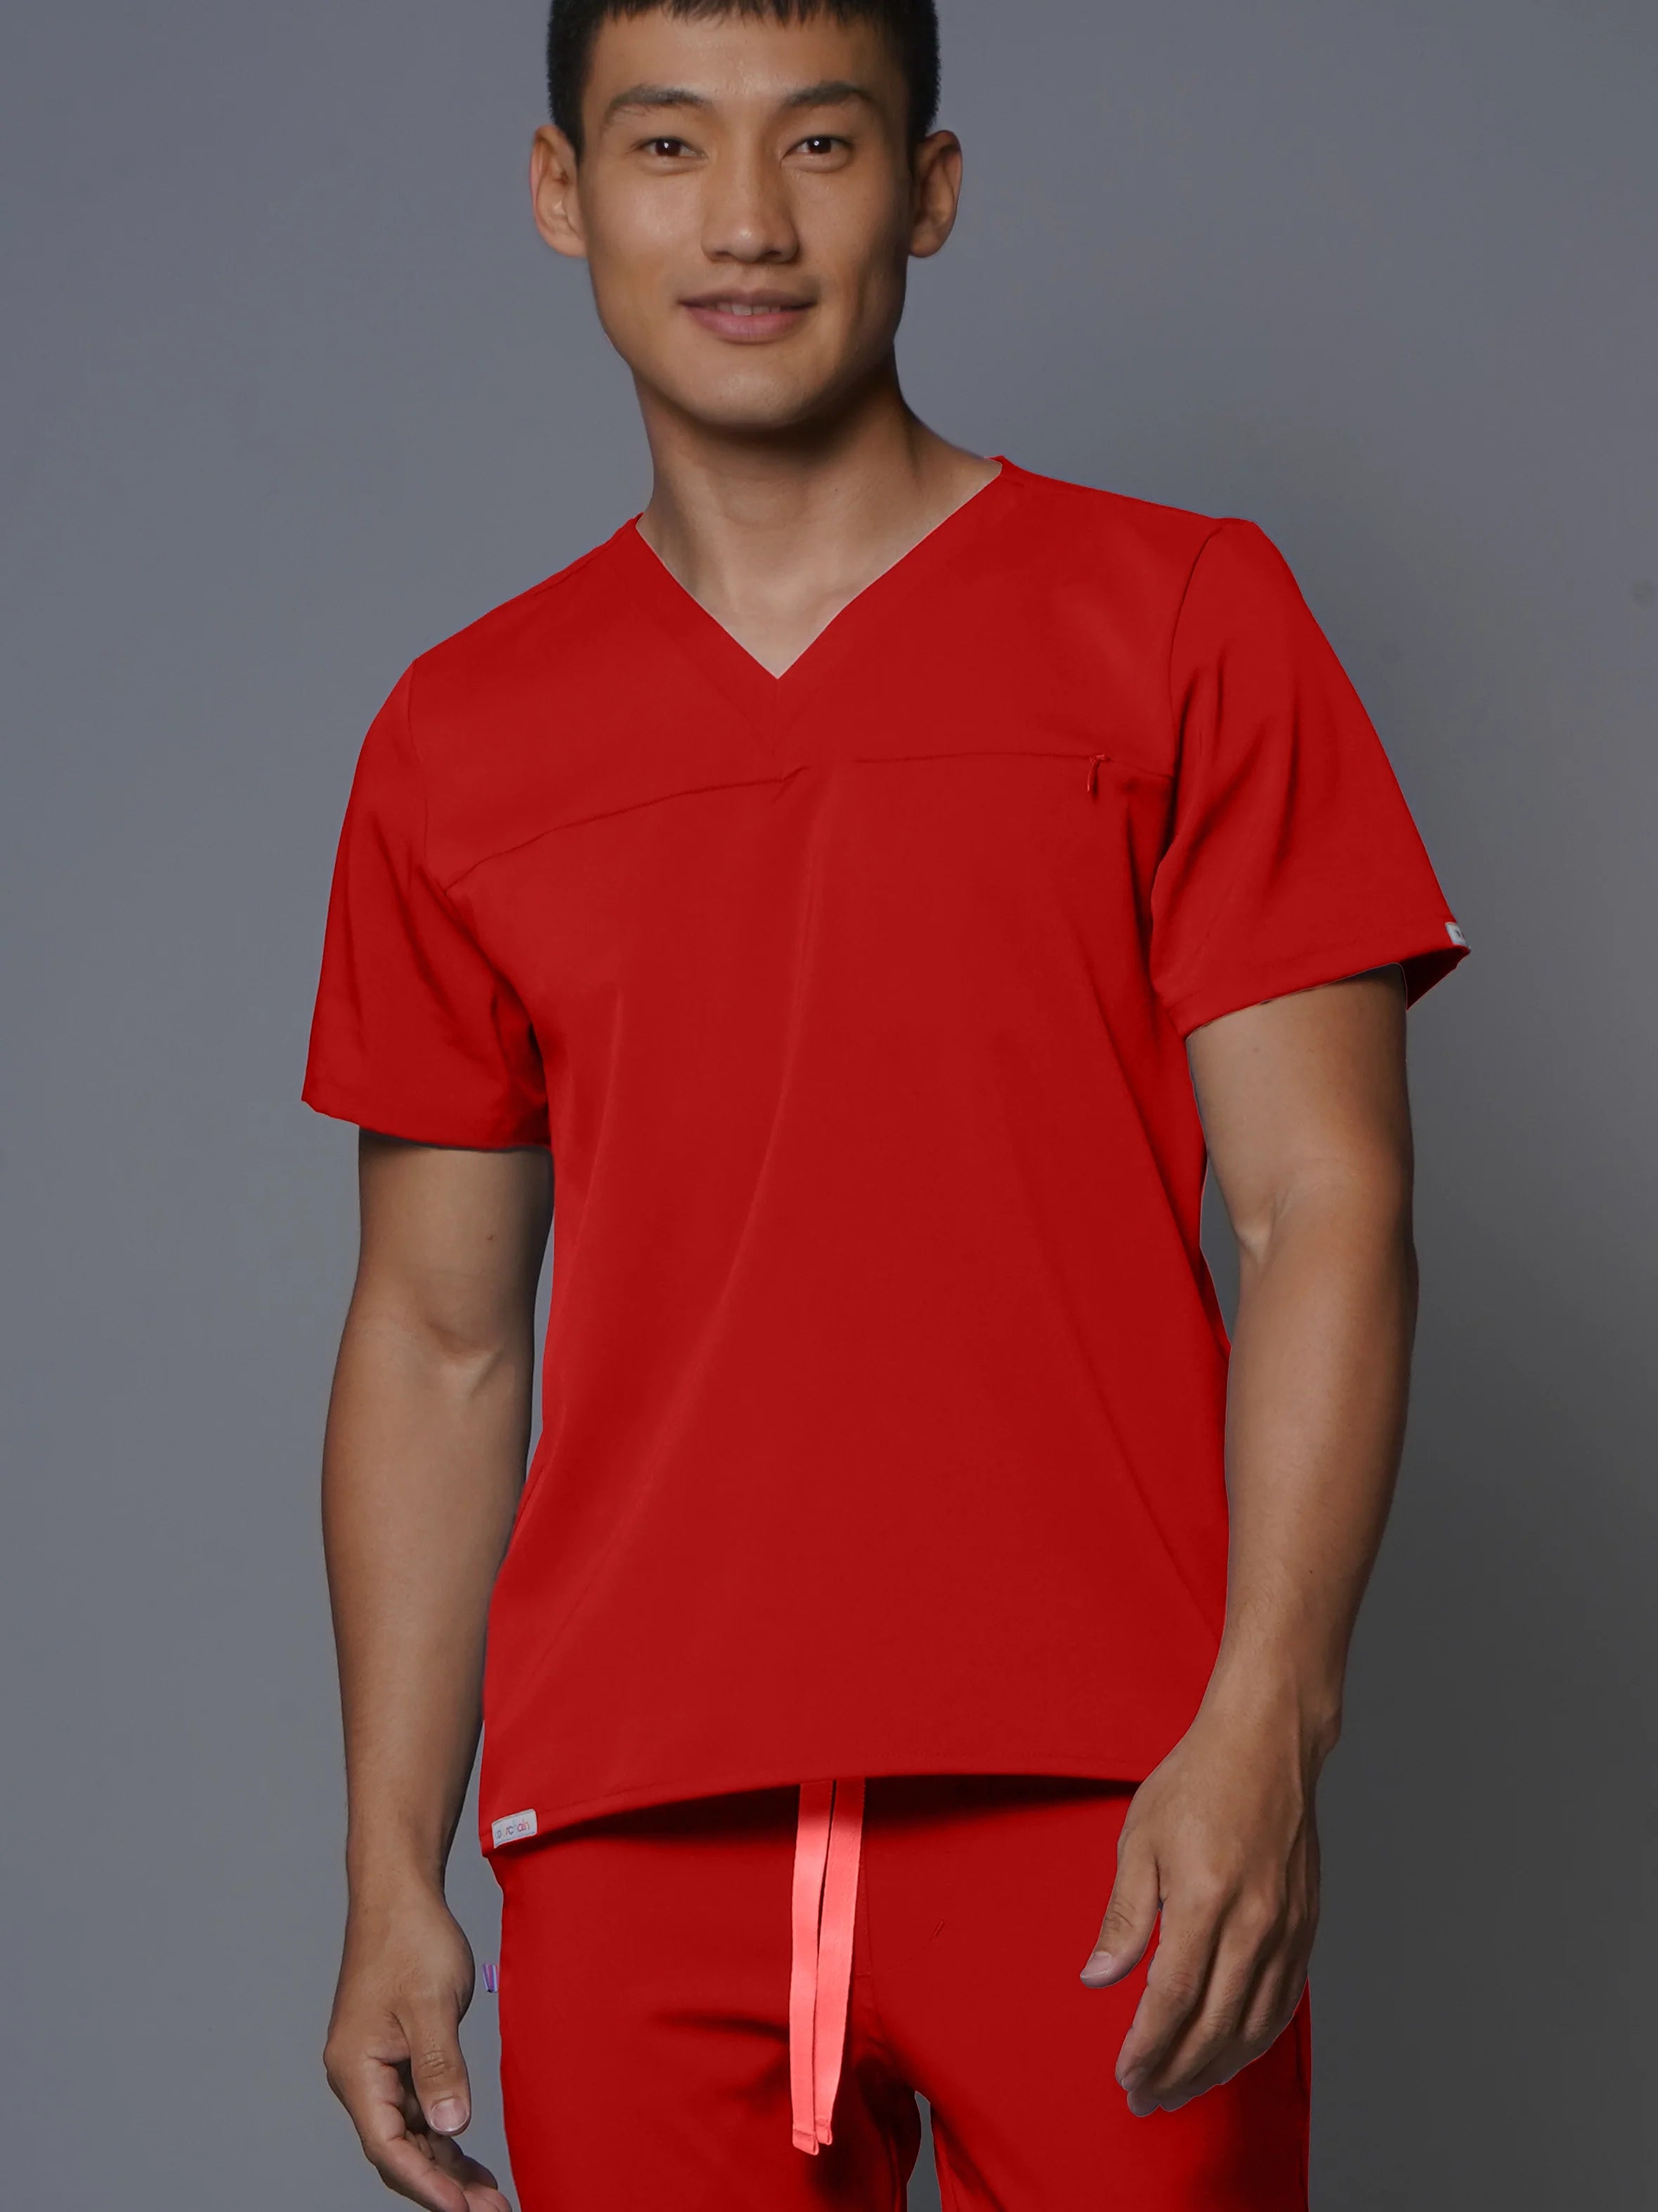 Top Pamplona Red Dragon. Top uniforme médico para hombre.